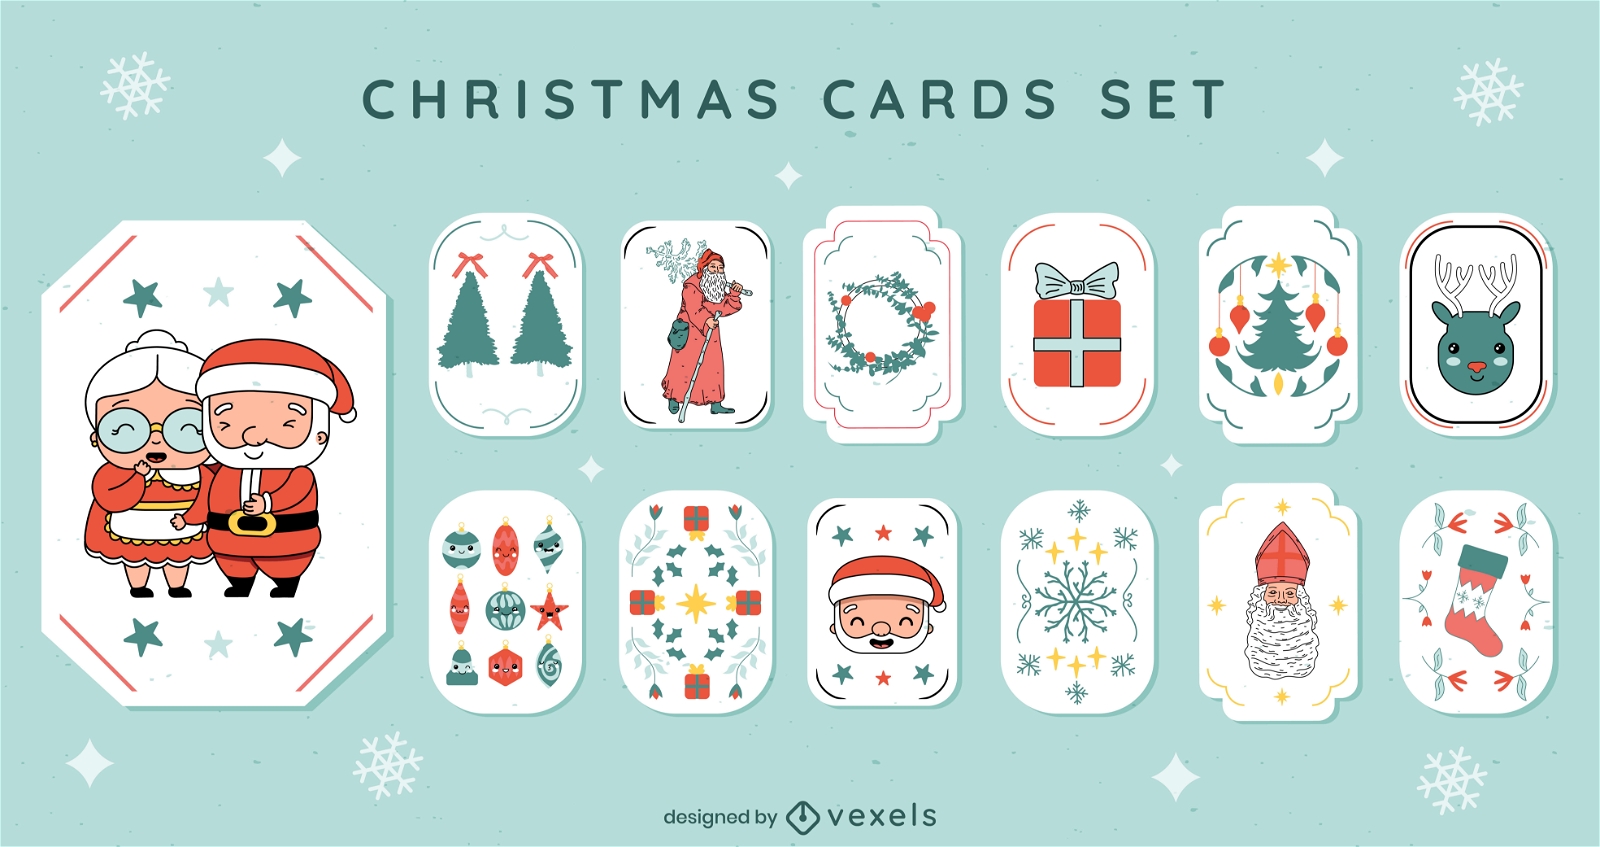 Cute Christmas cards simple set